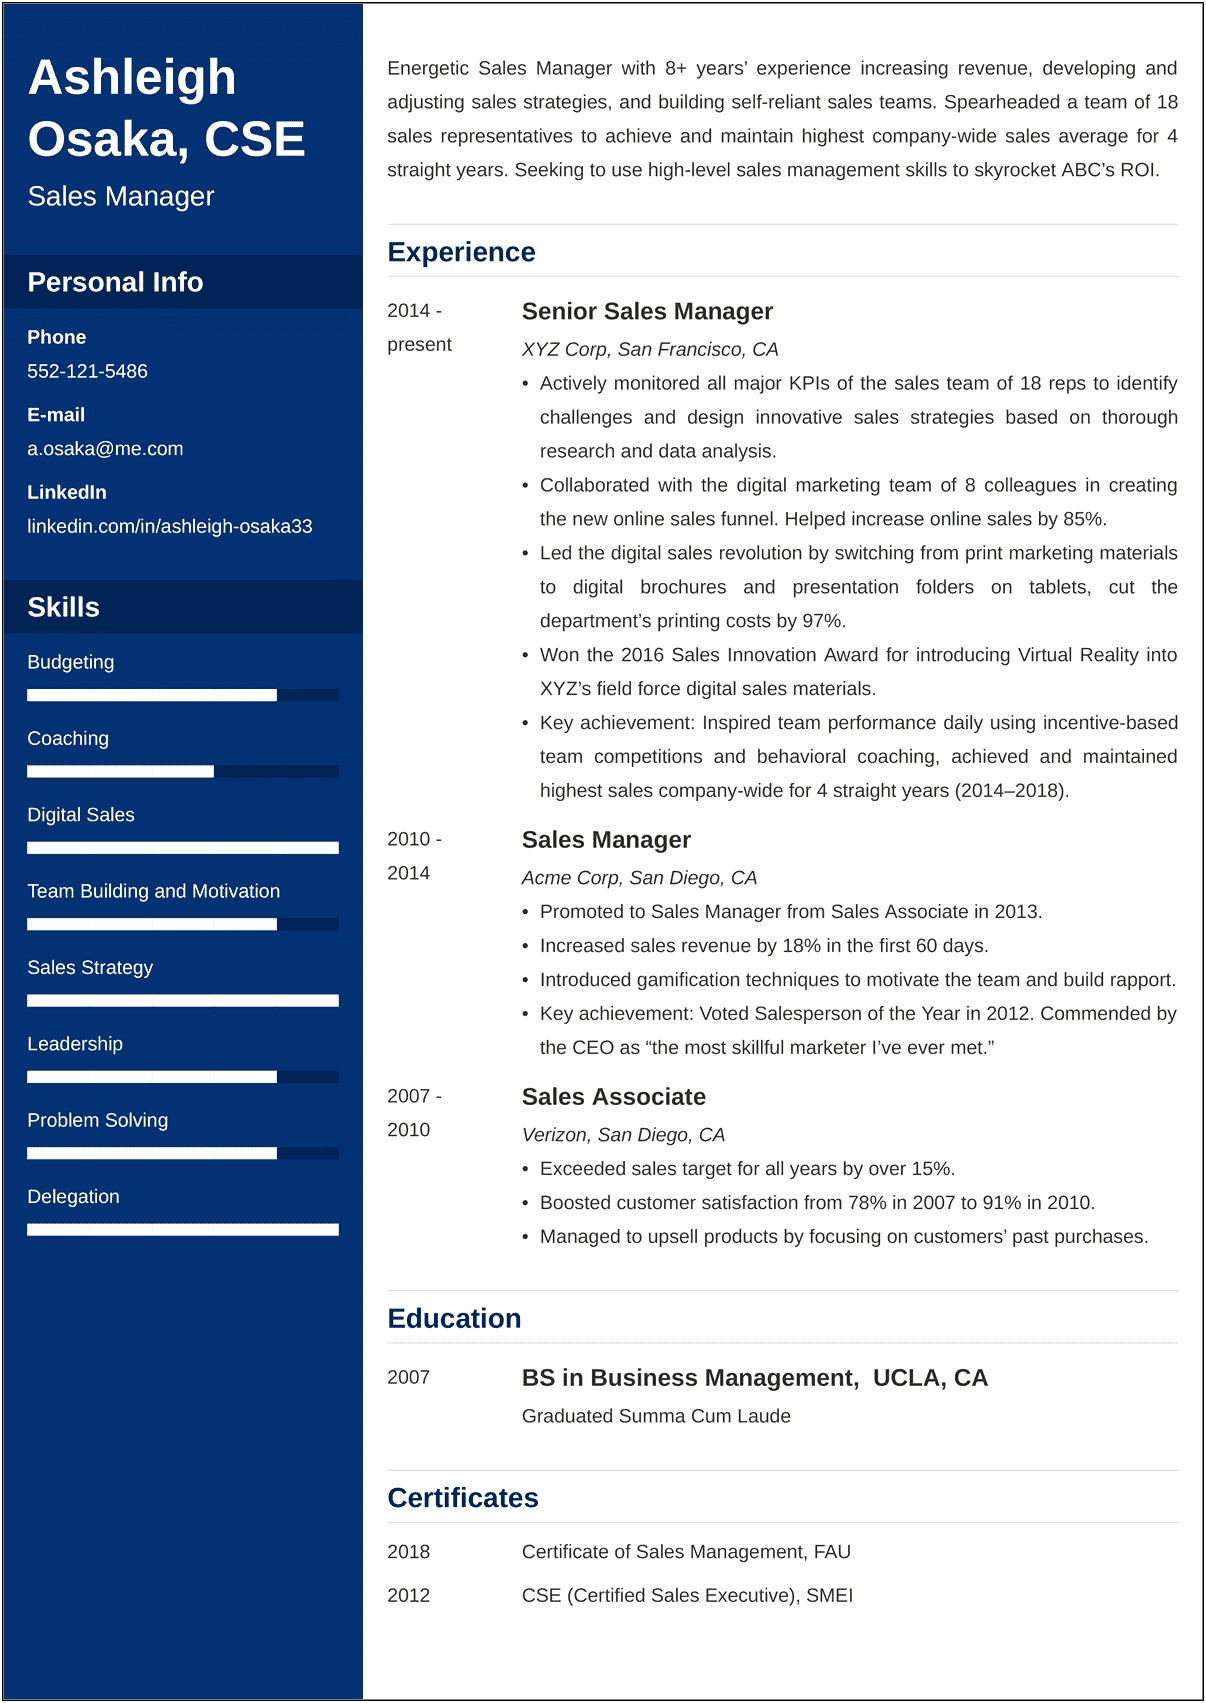 Sample Resume For Managing Director Position